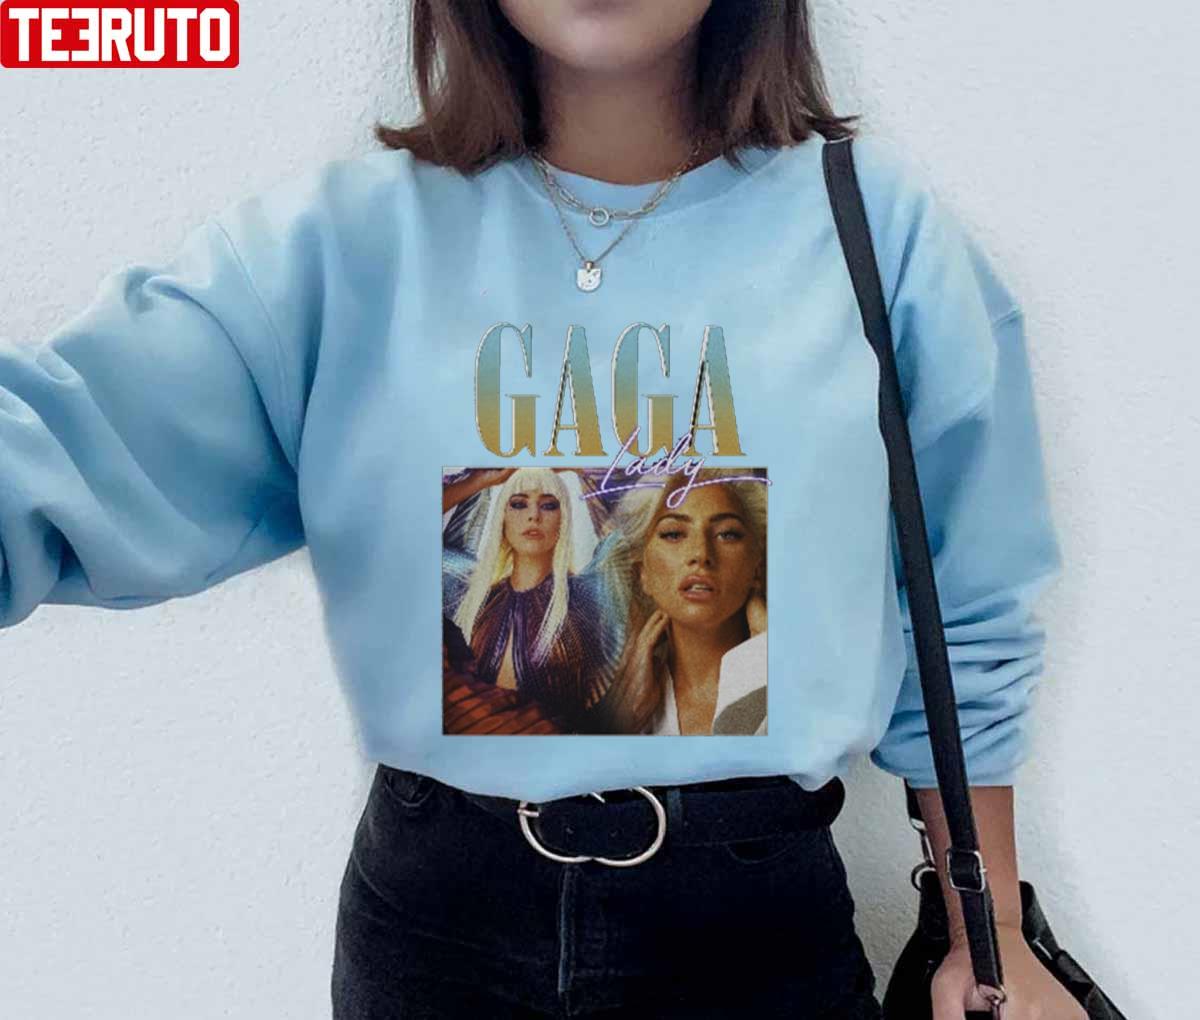 Lady Gaga Vintage Musical Unisex T-Shirt